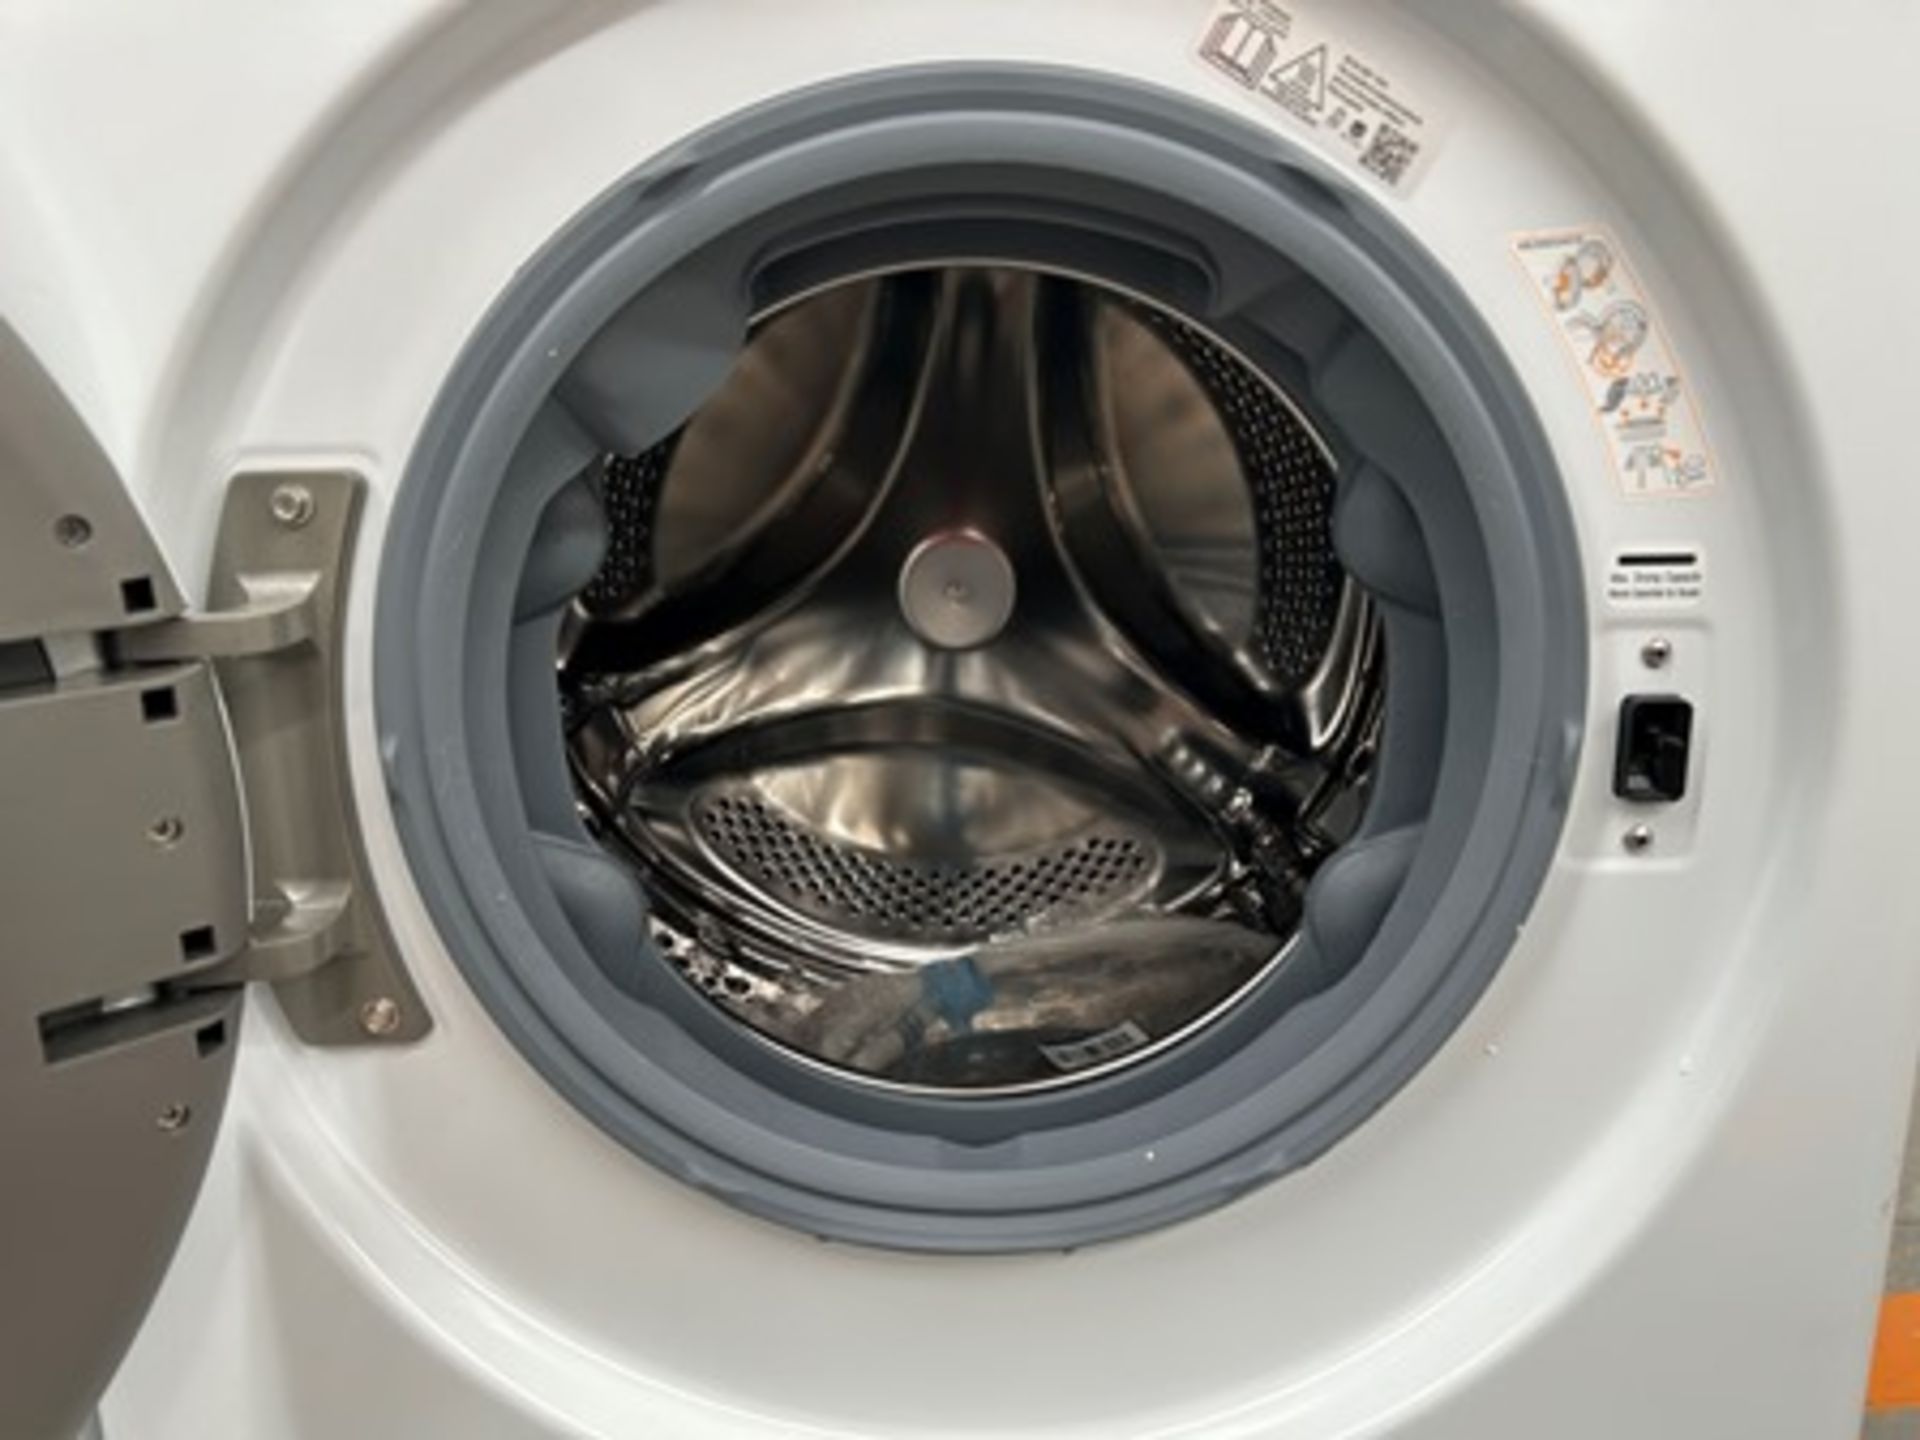 Lote de 2 lavadoras contiene: 1 Lavadora de 12 KG Marca LG, Modelo WM12WVC4S6, Serie 53874, Color B - Image 6 of 8